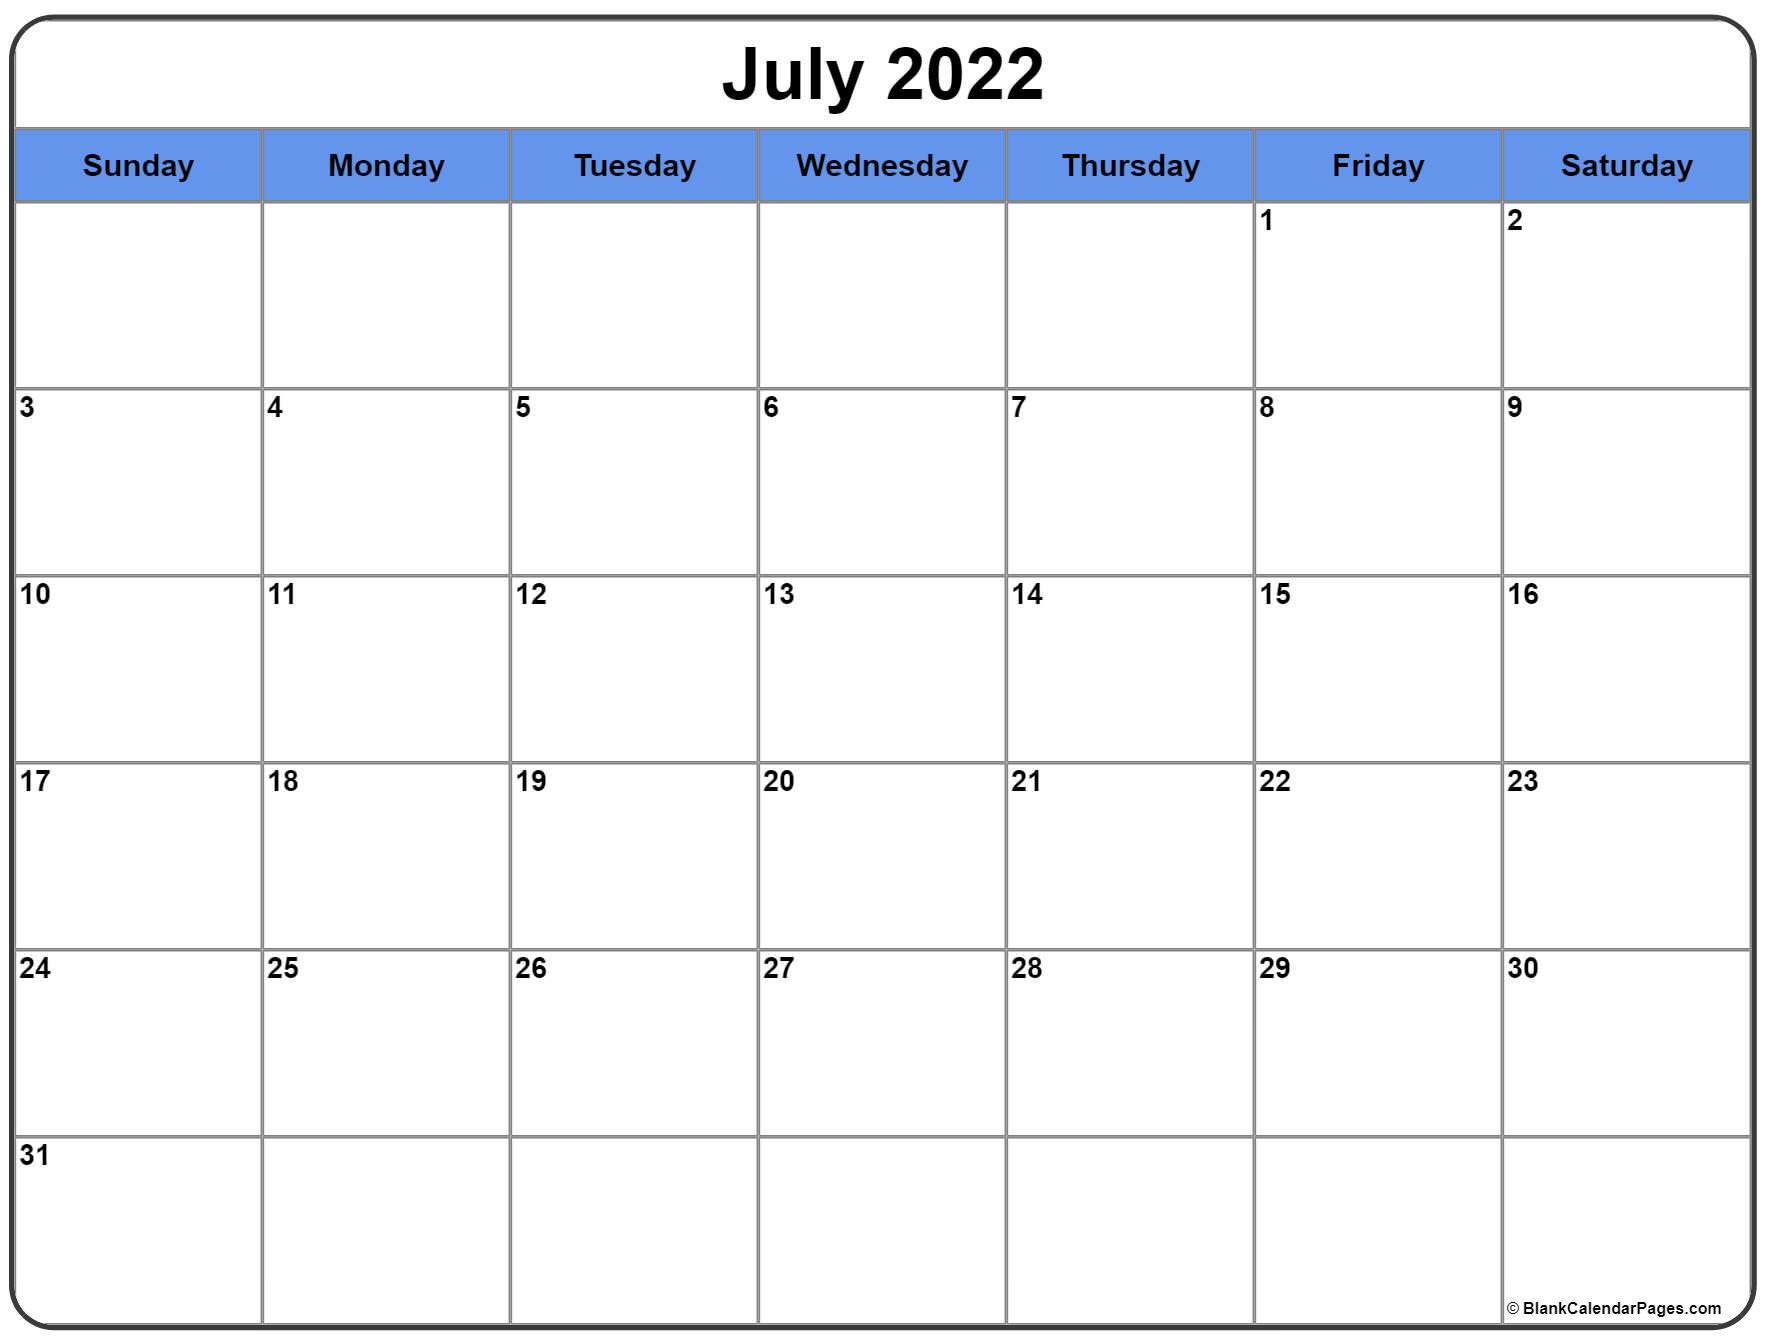 July 2022 Calendar | Free Printable Monthly Calendars